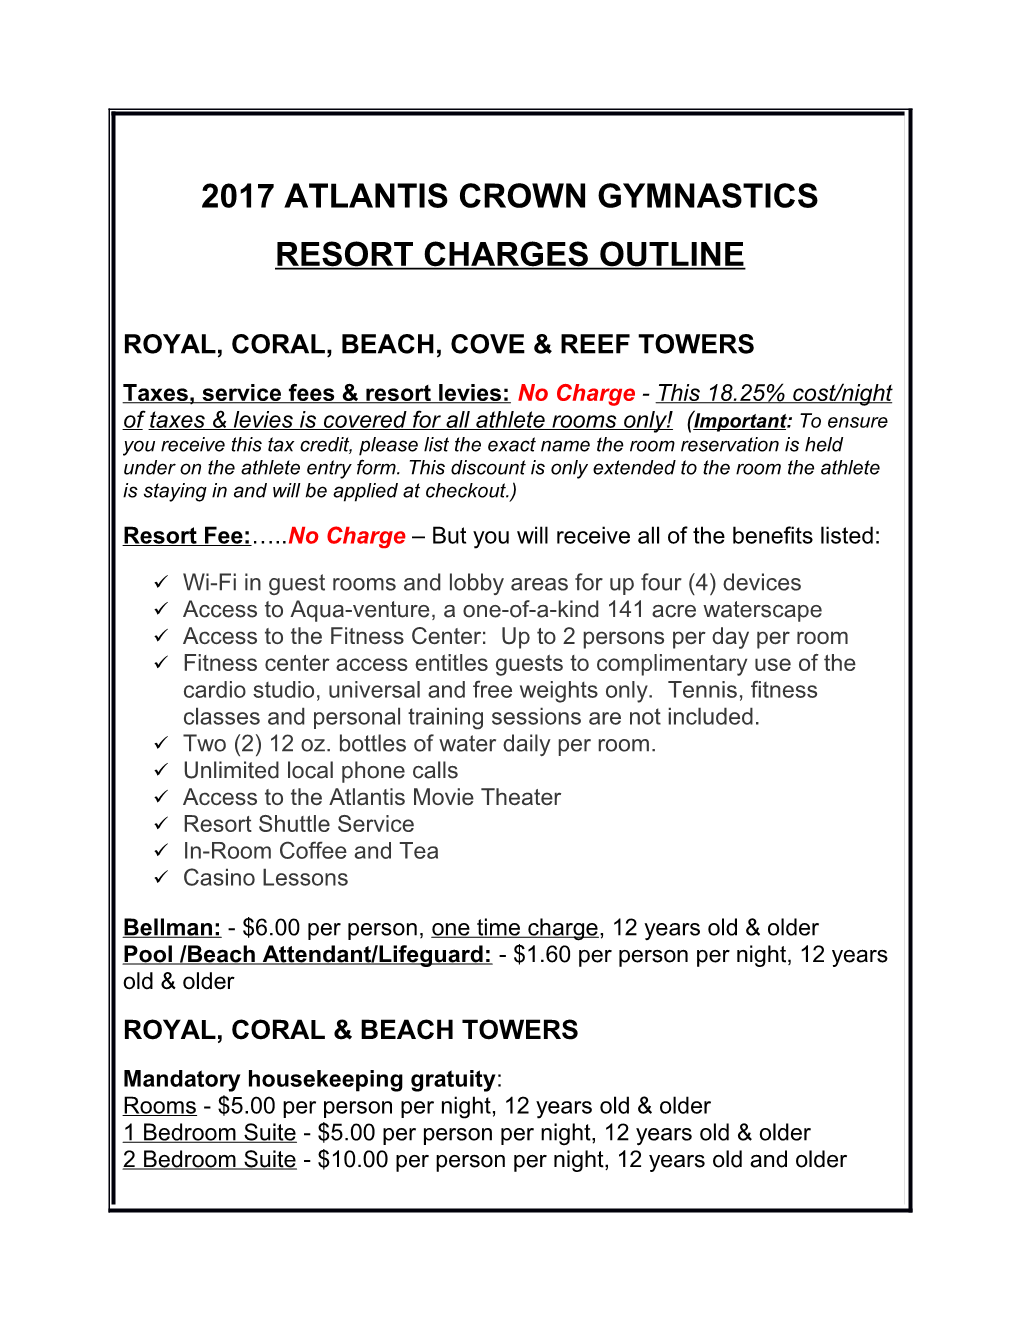 2017 Atlantis Crown Gymnastics